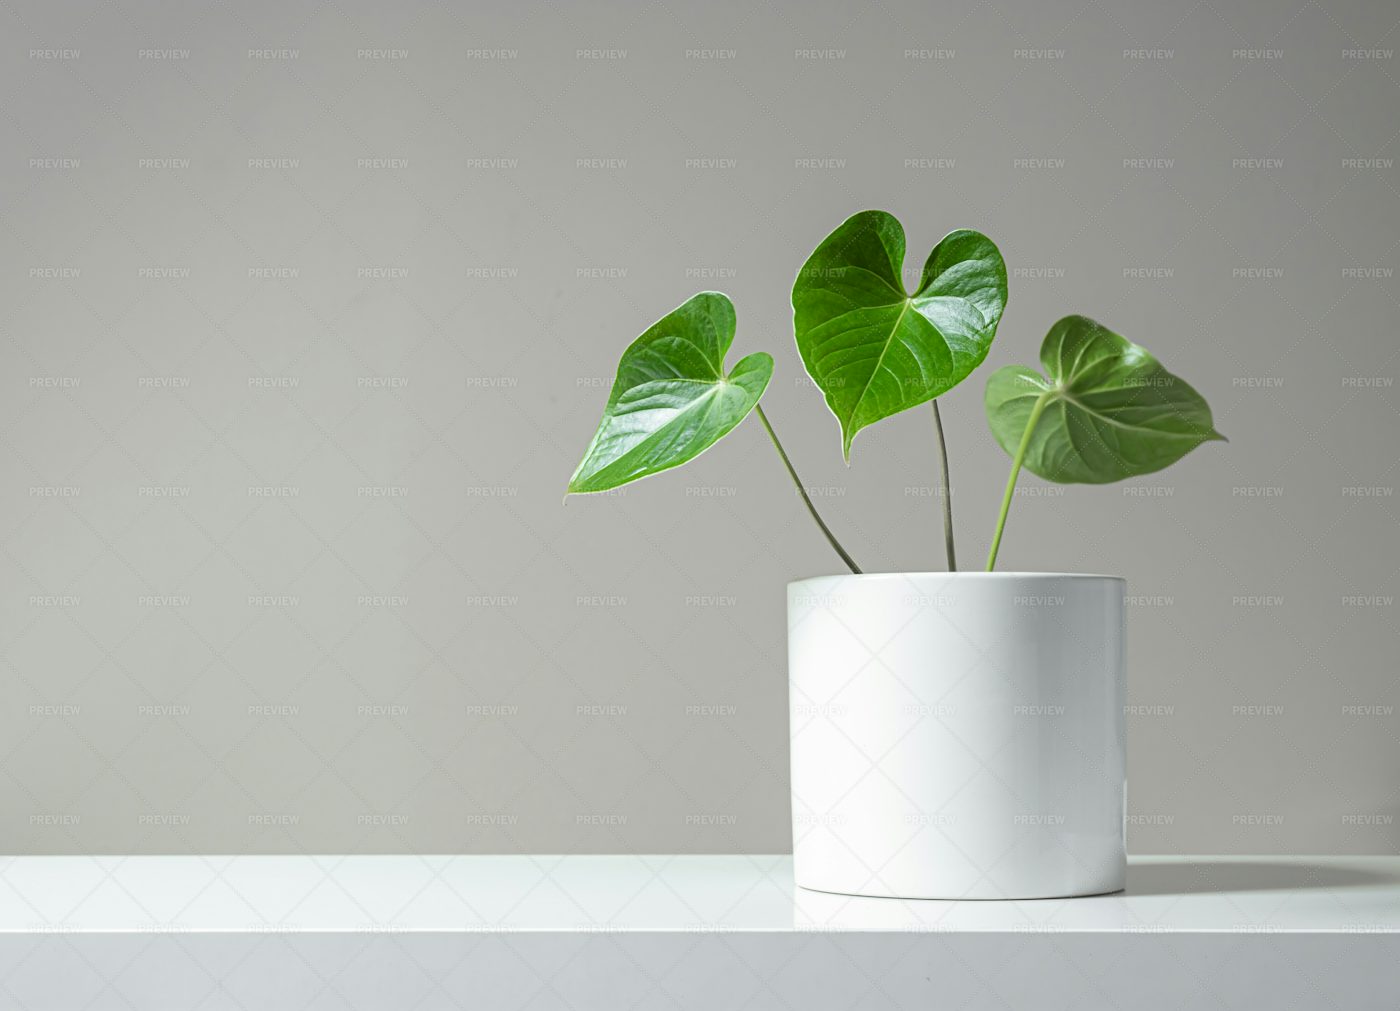 Anthurium In A White Pot: Stock Photos